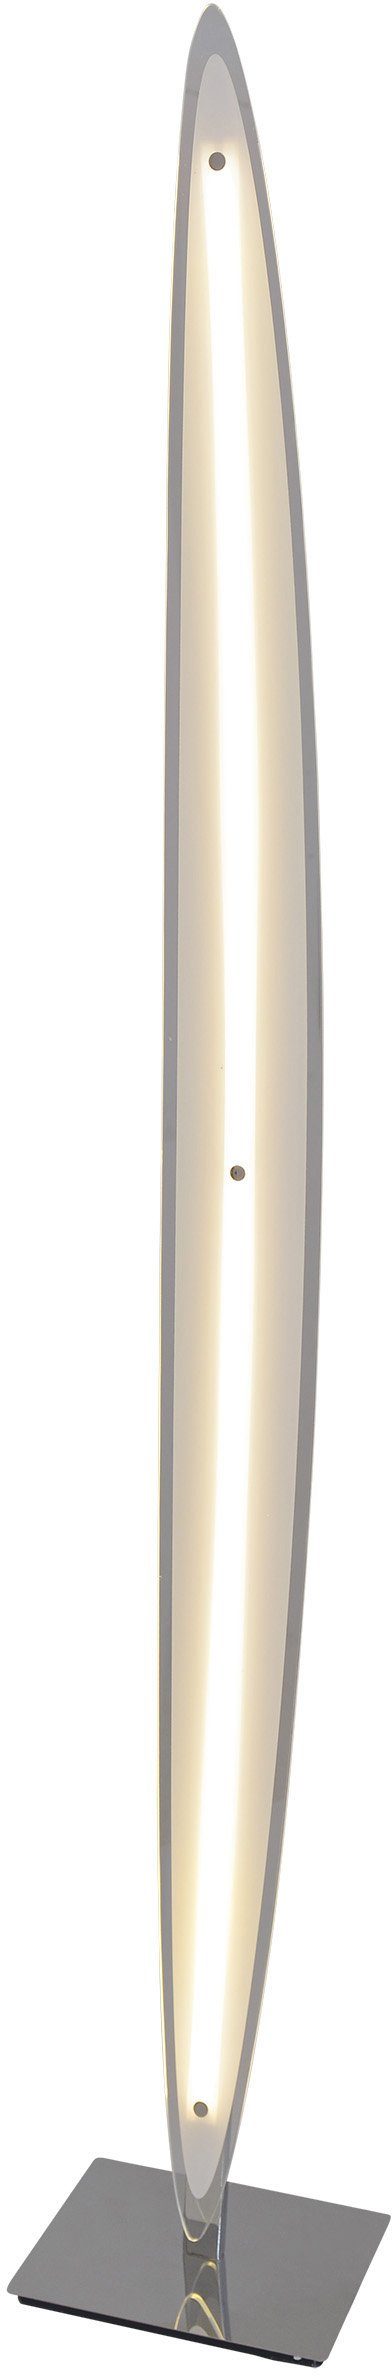 1850lm "Surf",dimmbar, Warmweiß, 3000K; LED Surf, LED´s integriert, Stehlampe Stehleuchte Dimmfunktion, fest inkl. total näve 29W 144 LED